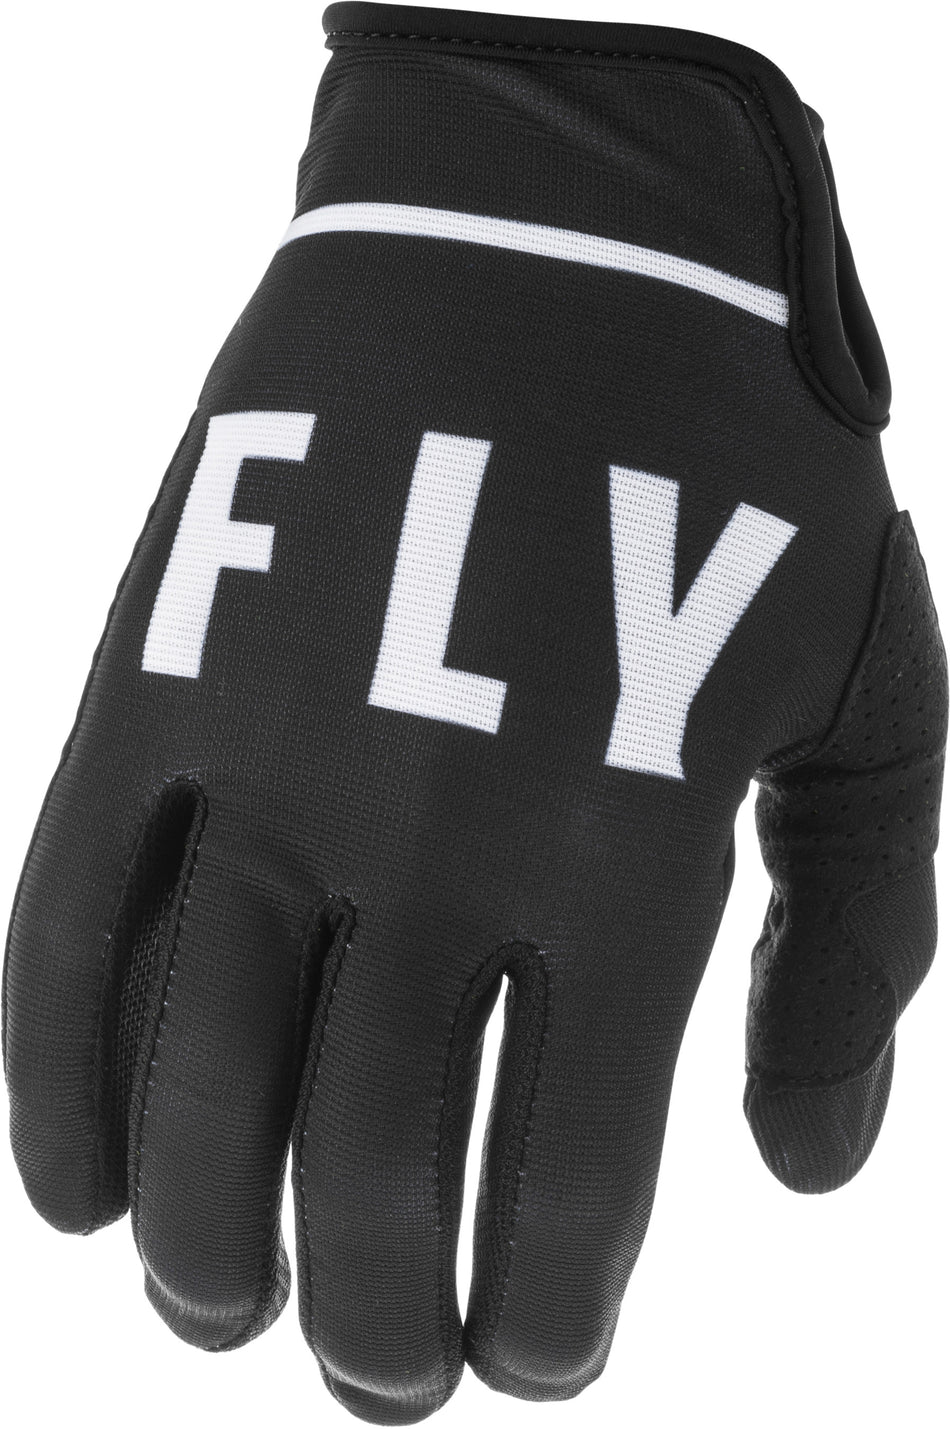 FLY RACING Lite Gloves Black/White Sz 06 373-71106